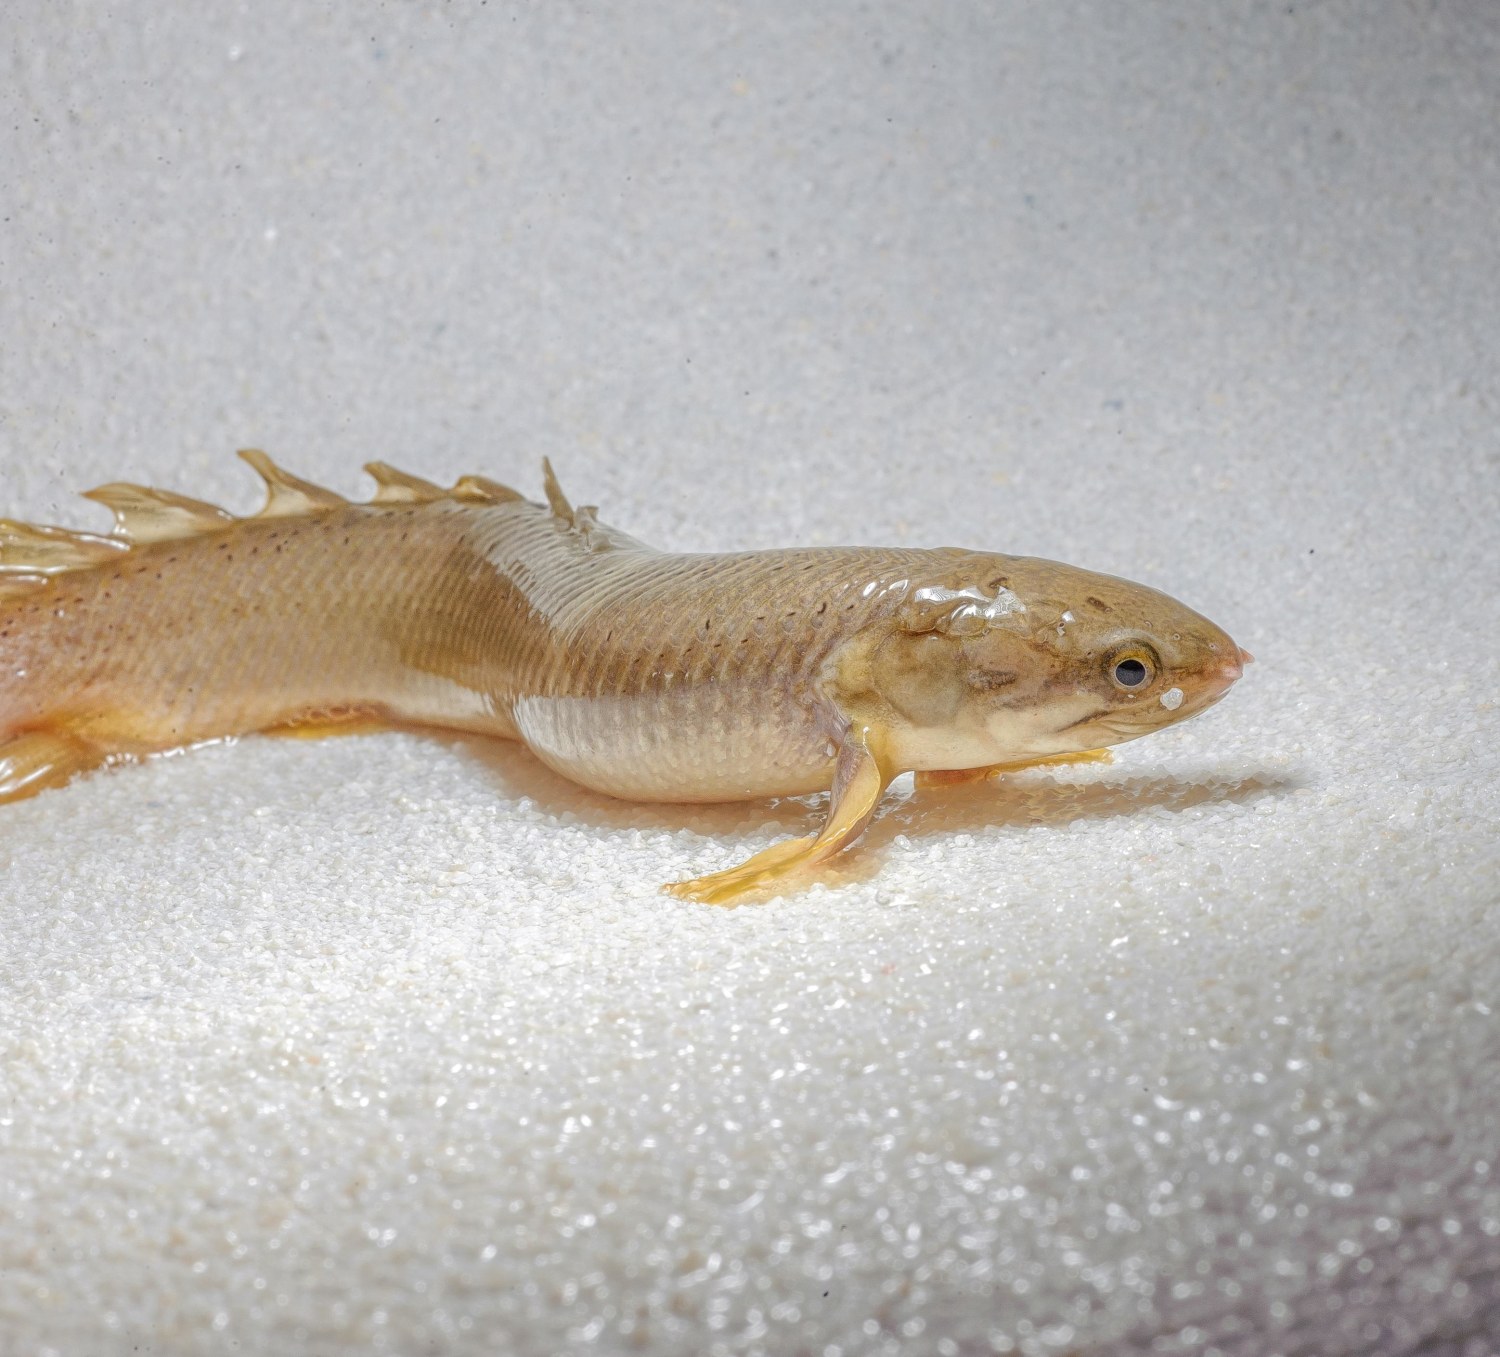 To Study Evolution, Scientists Raise Fish That 'Walk' on Land